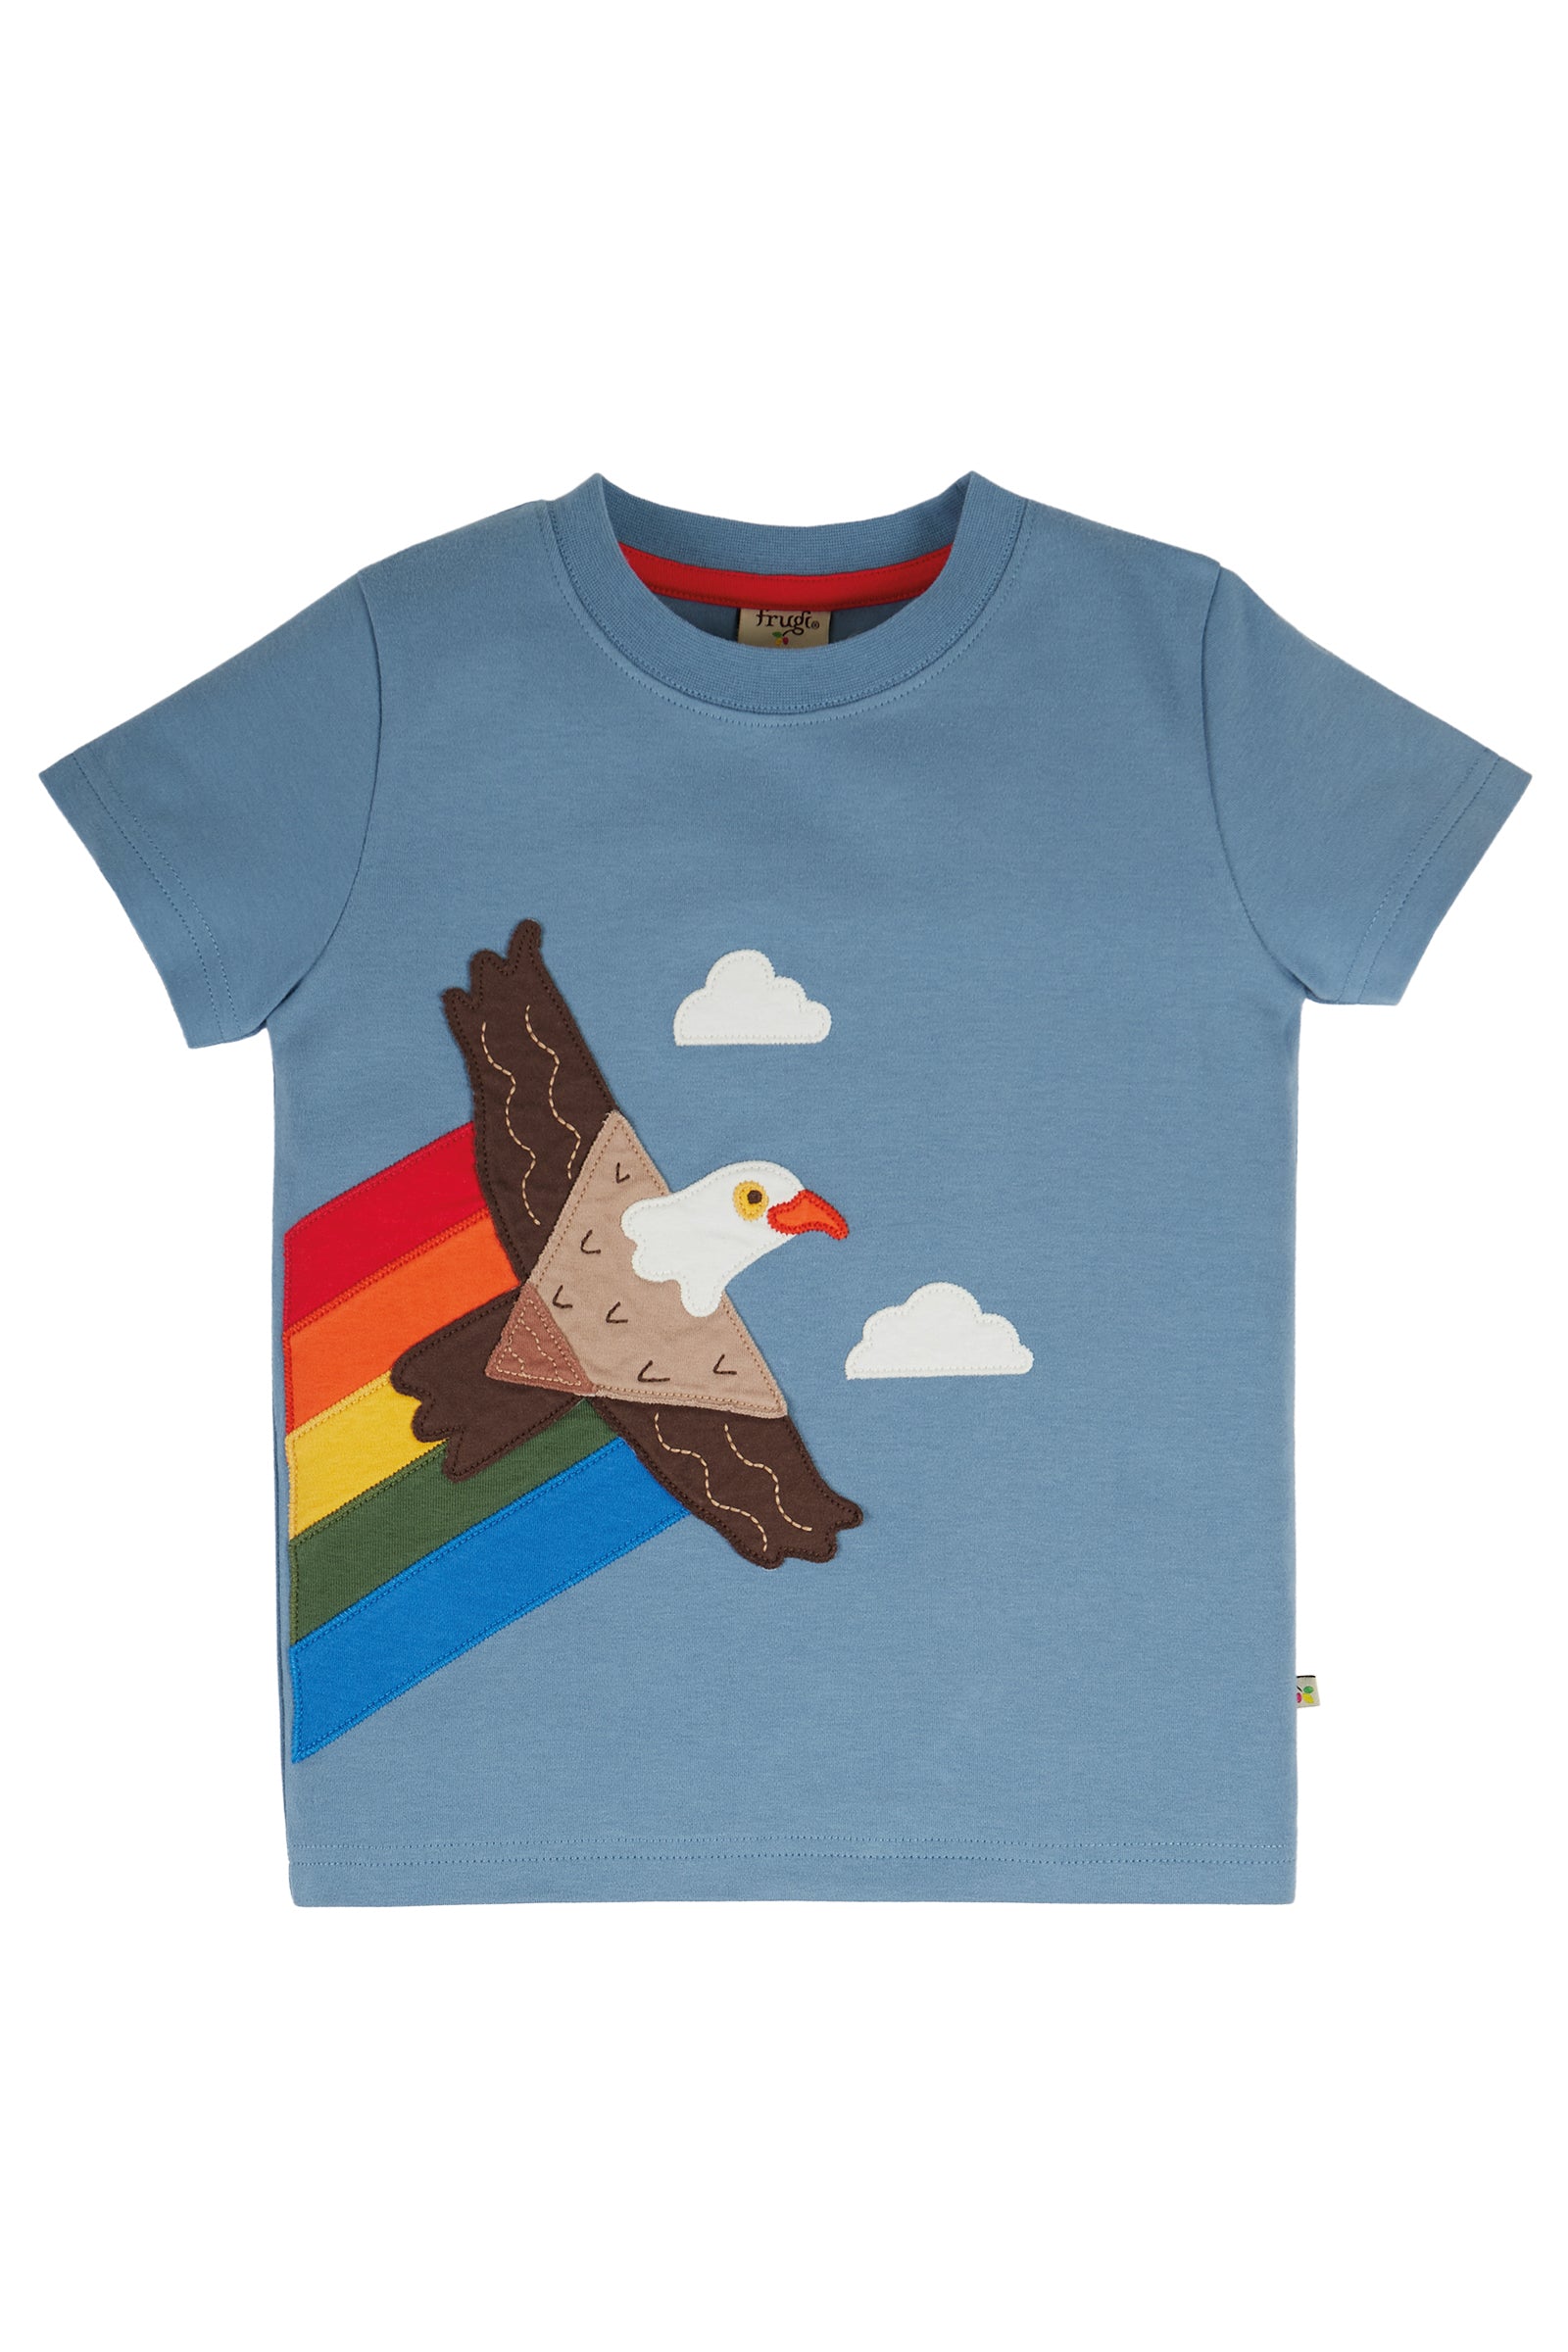 Frugi Carsen Applique T-shirt - Abisko Sky/Eagle